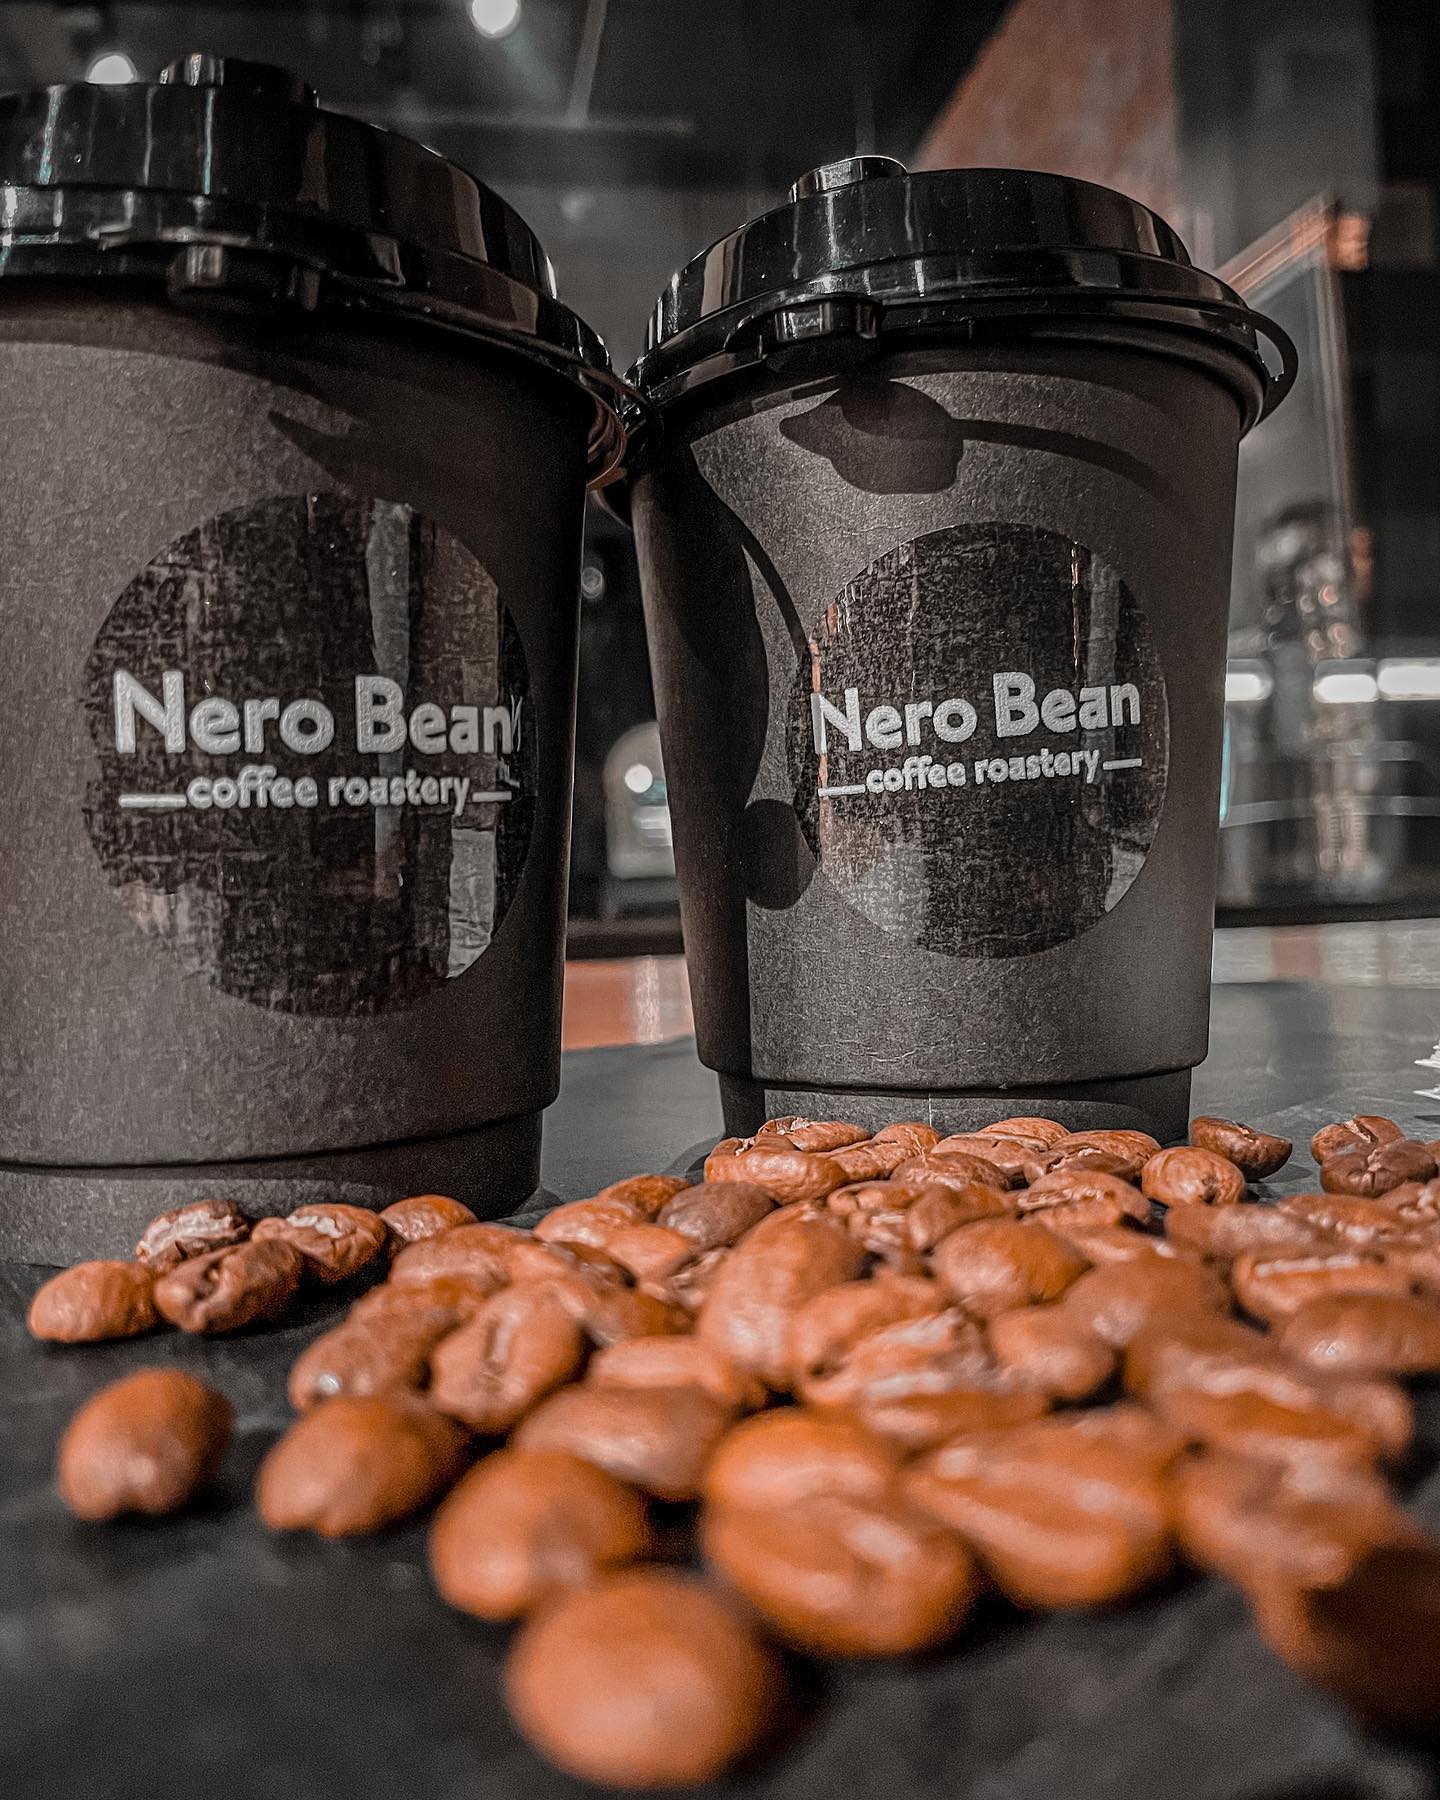 black cups of nero bean